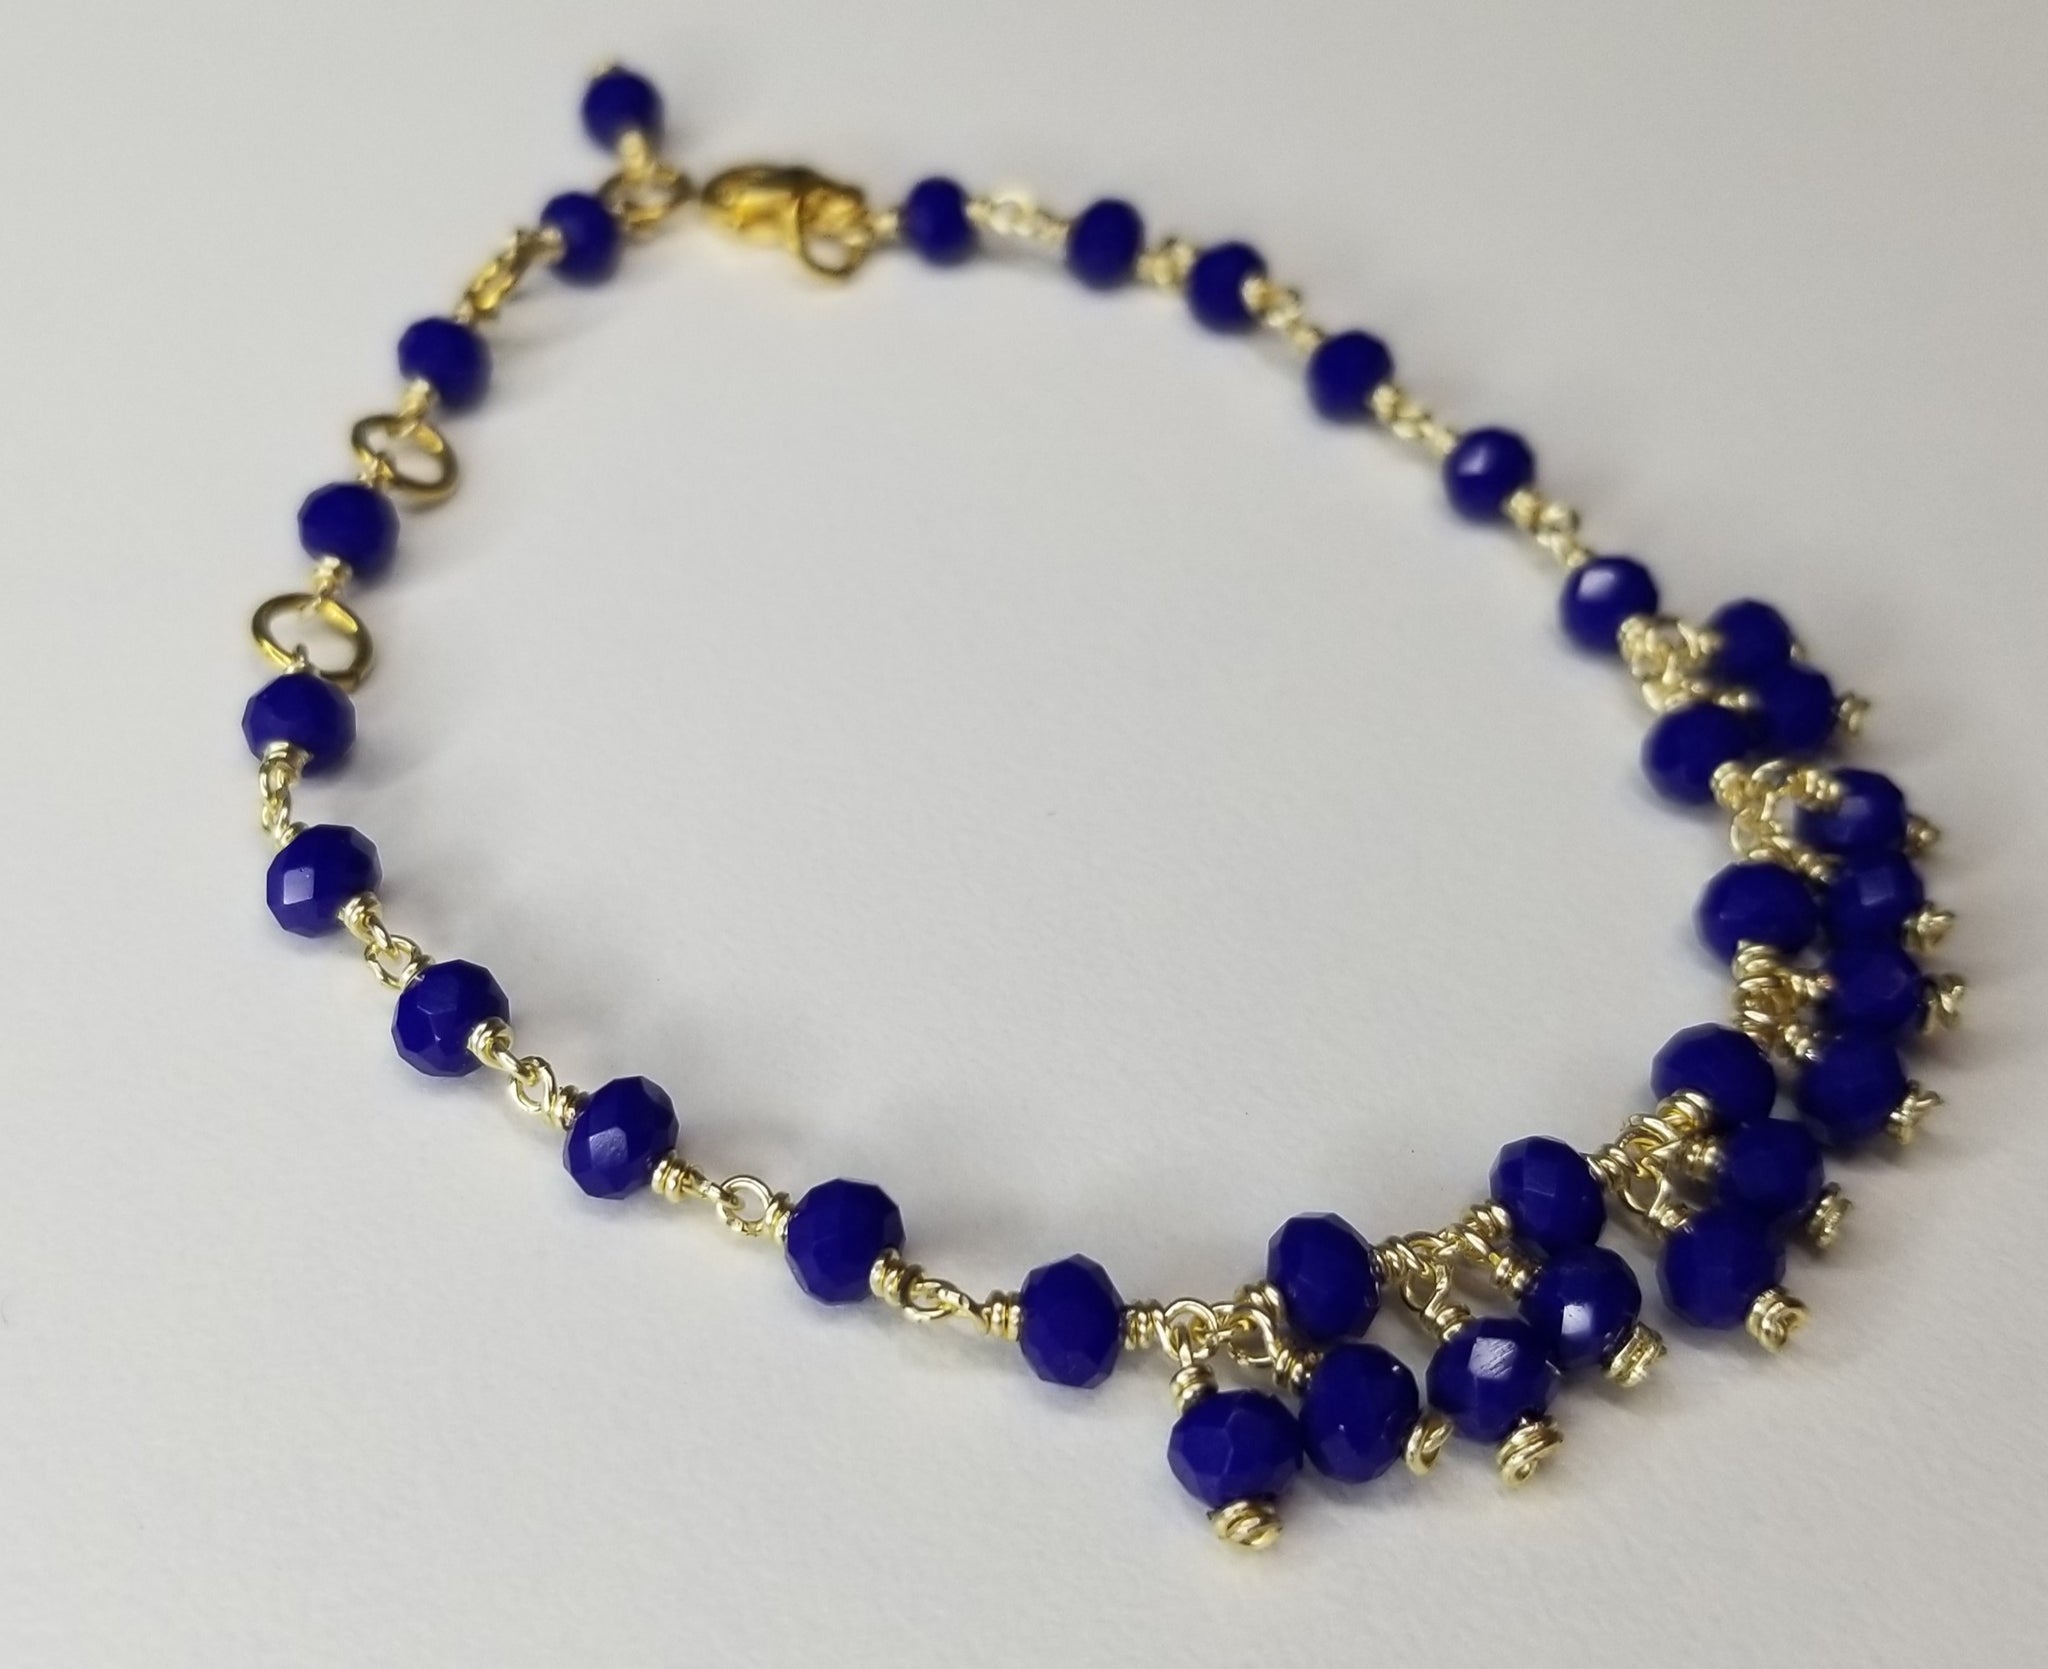 Gold and Navy blue crystals bracelet